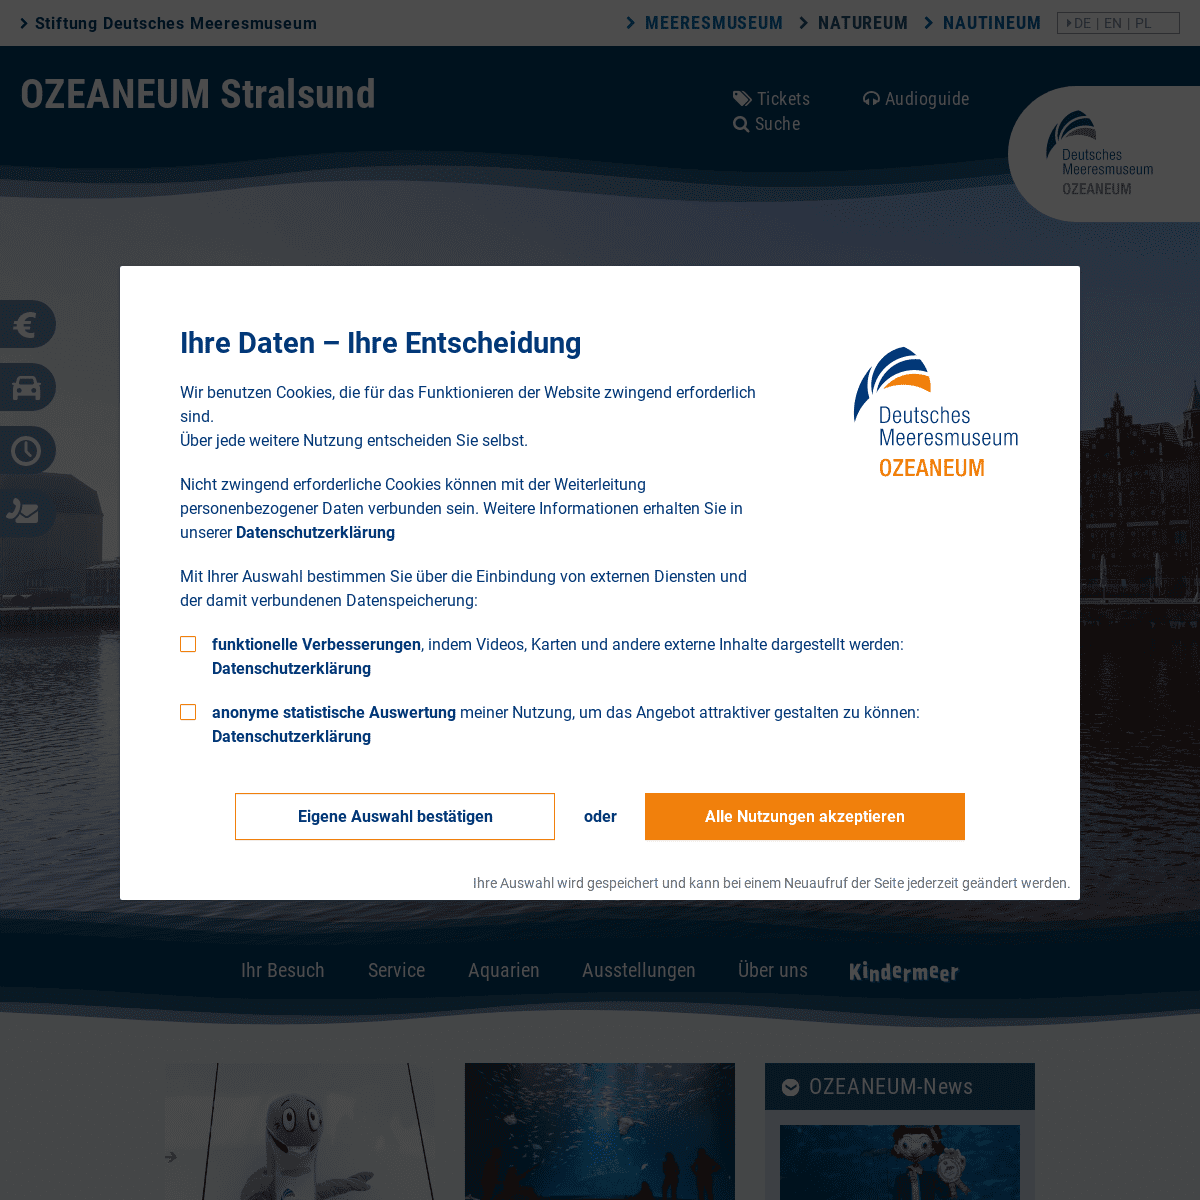 A complete backup of https://ozeaneum.de